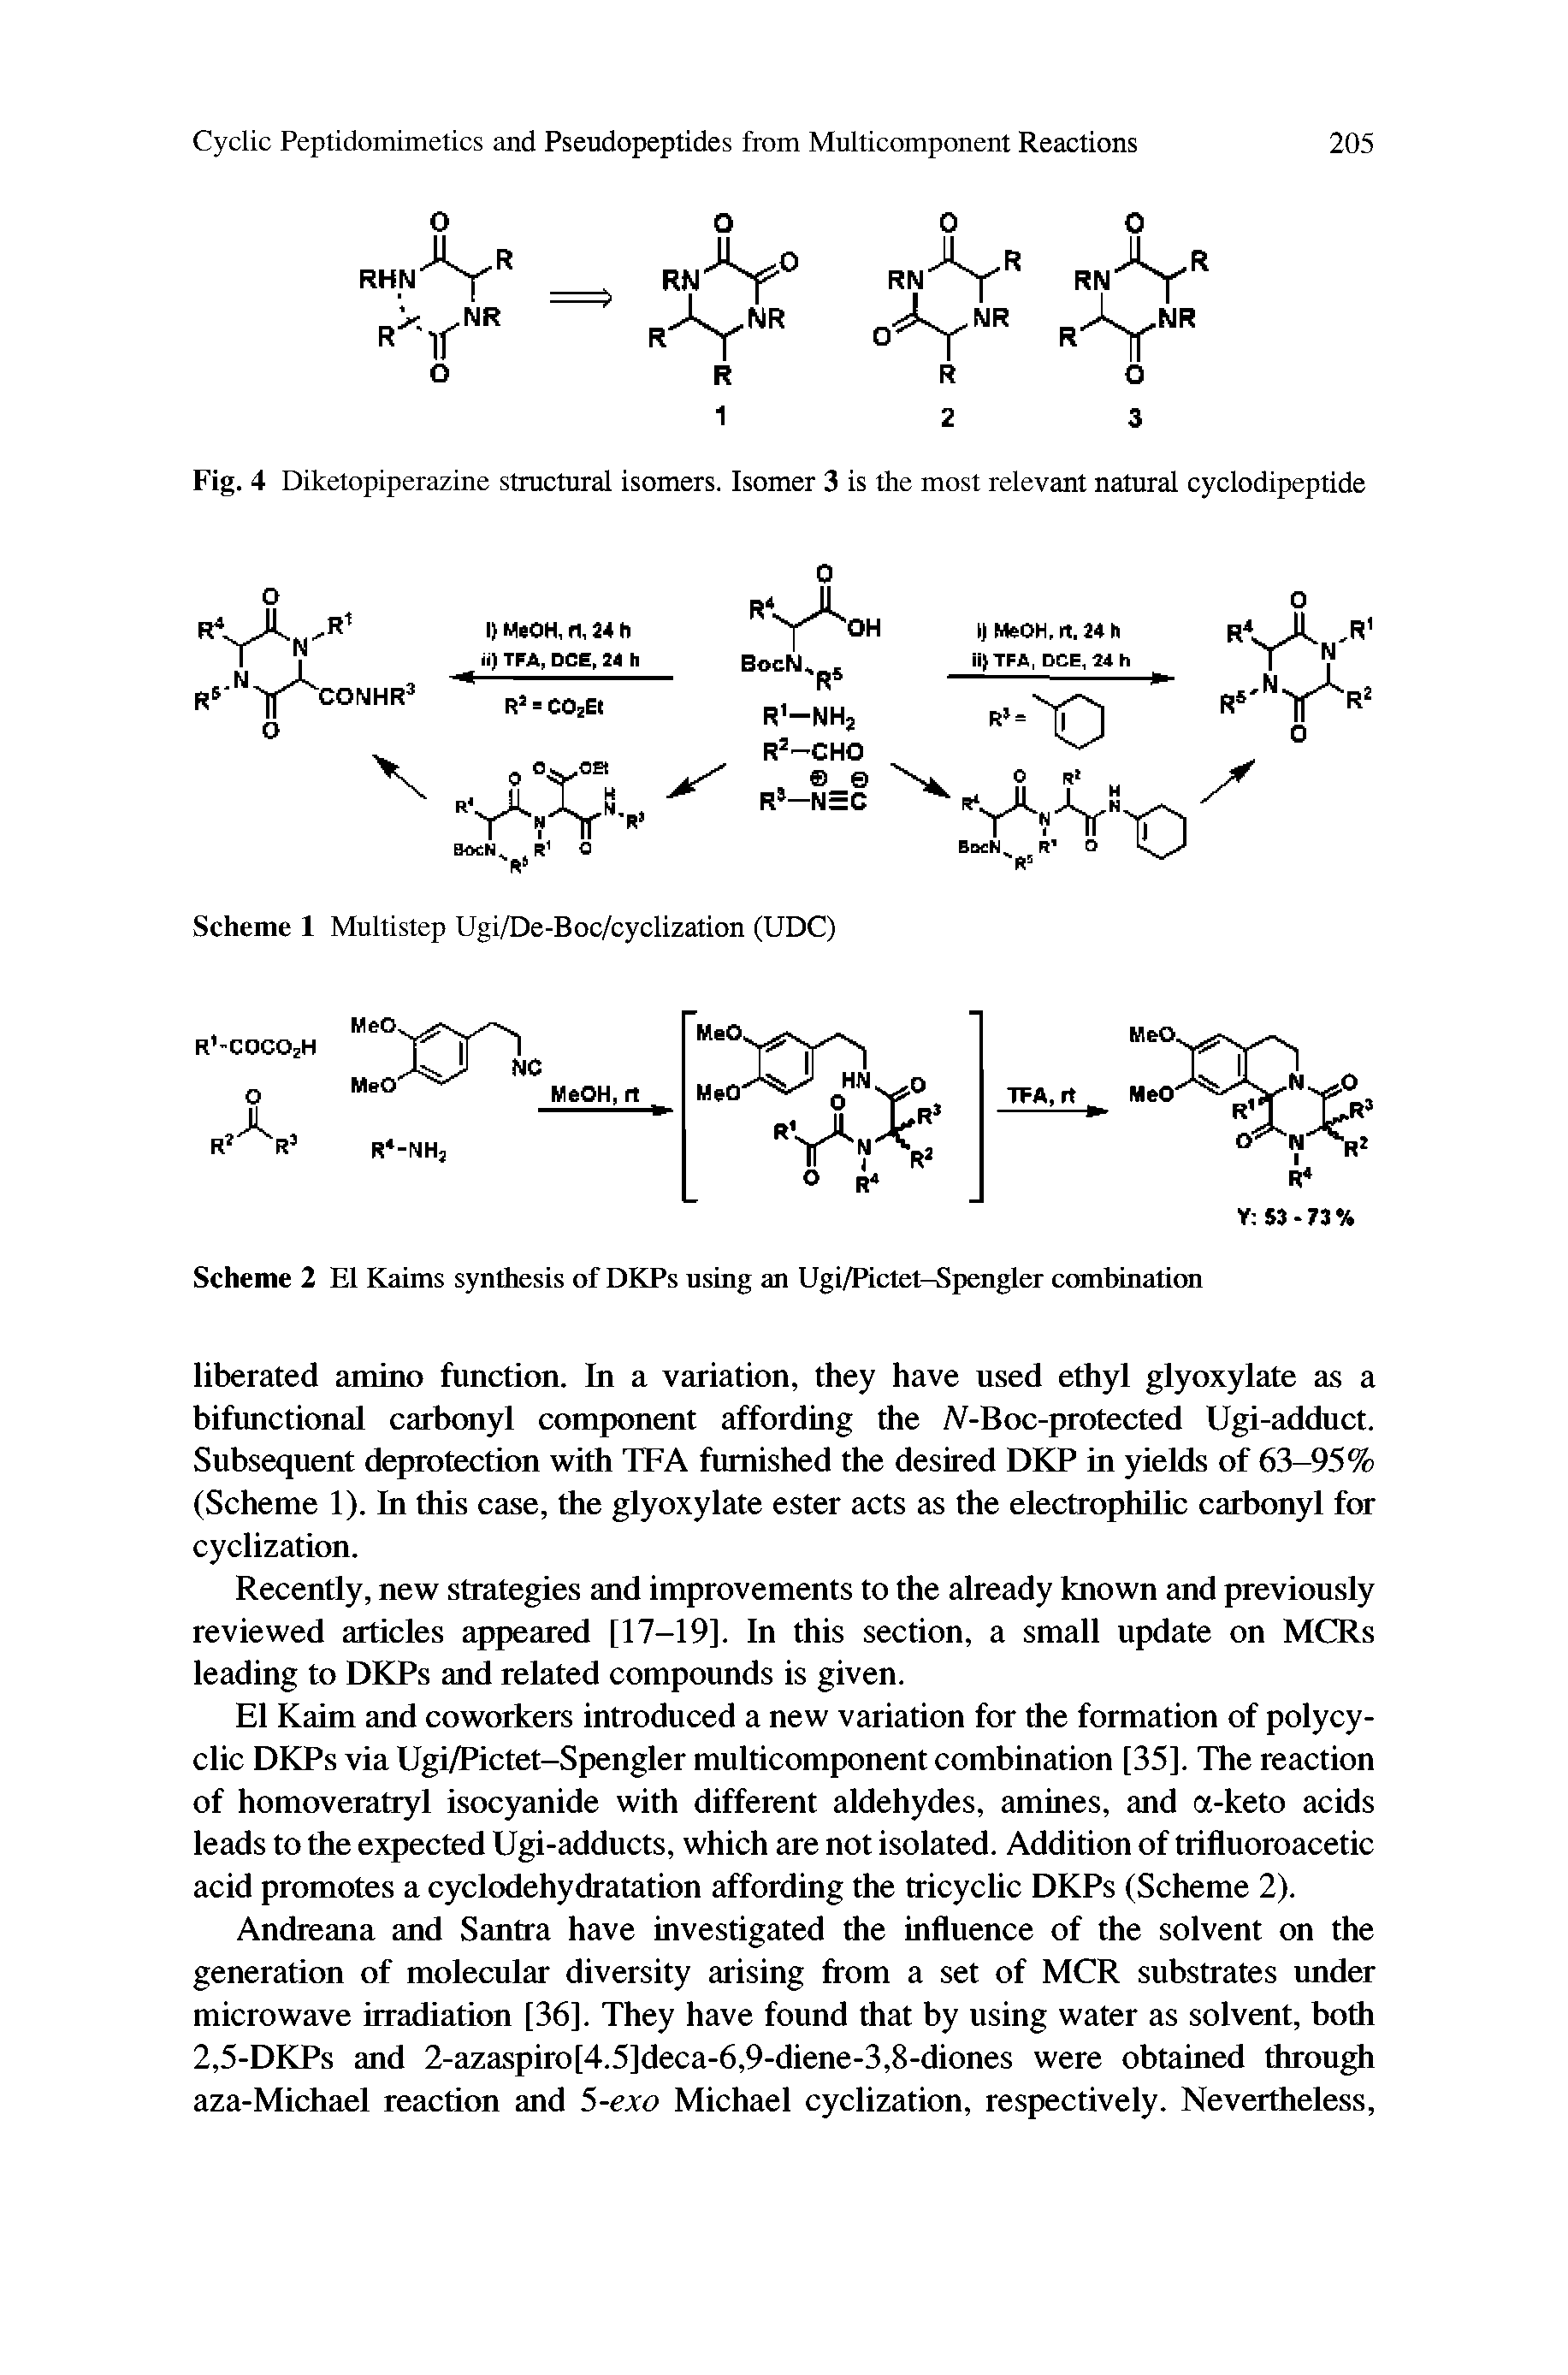 Scheme 2 El Kaims synthesis of DKPs using an Ugi/Pictet-Spengler combination...